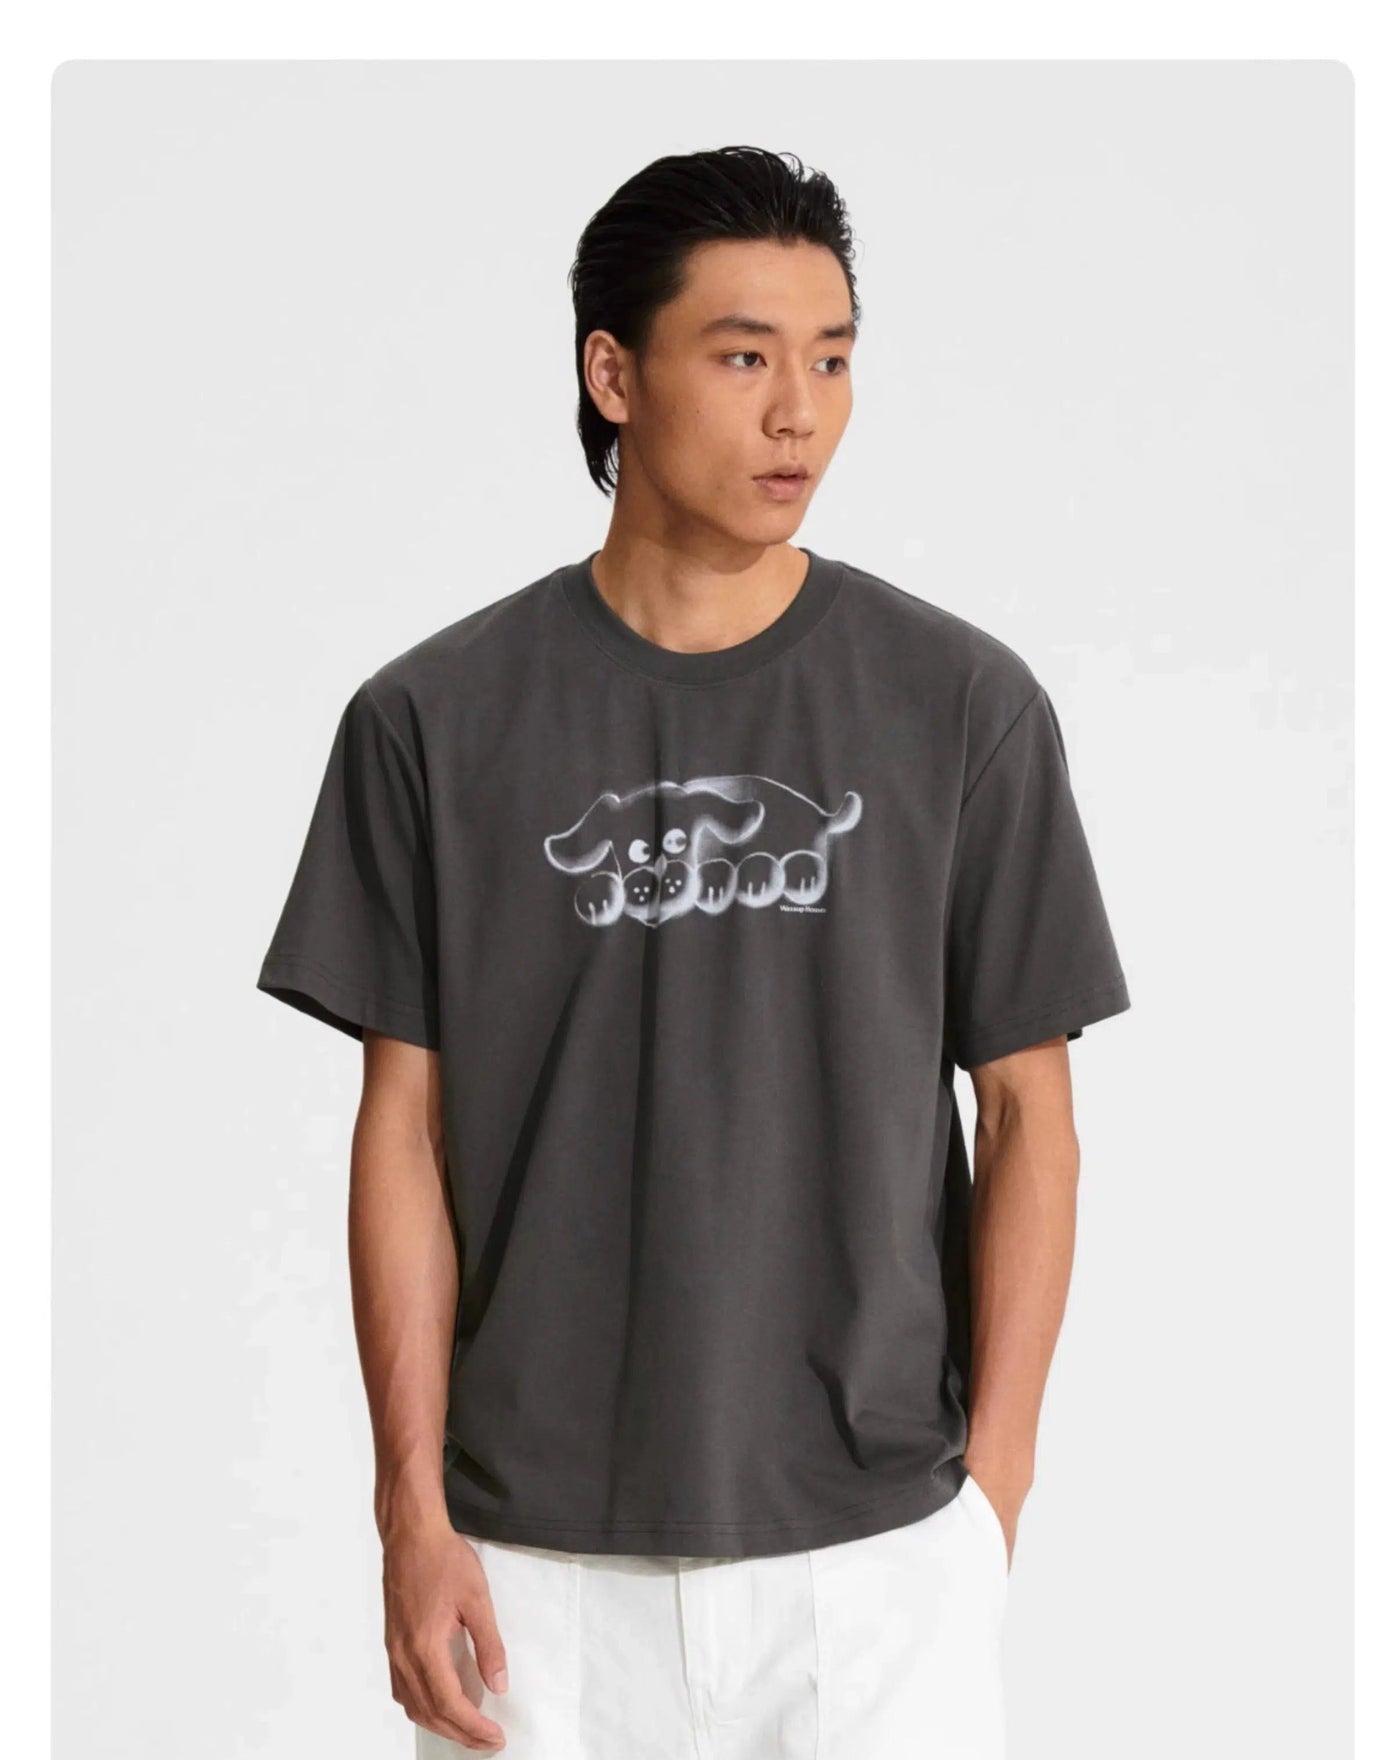 Graphic Print T-Shirt Korean Street Fashion T-Shirt By WASSUP Shop Online at OH Vault